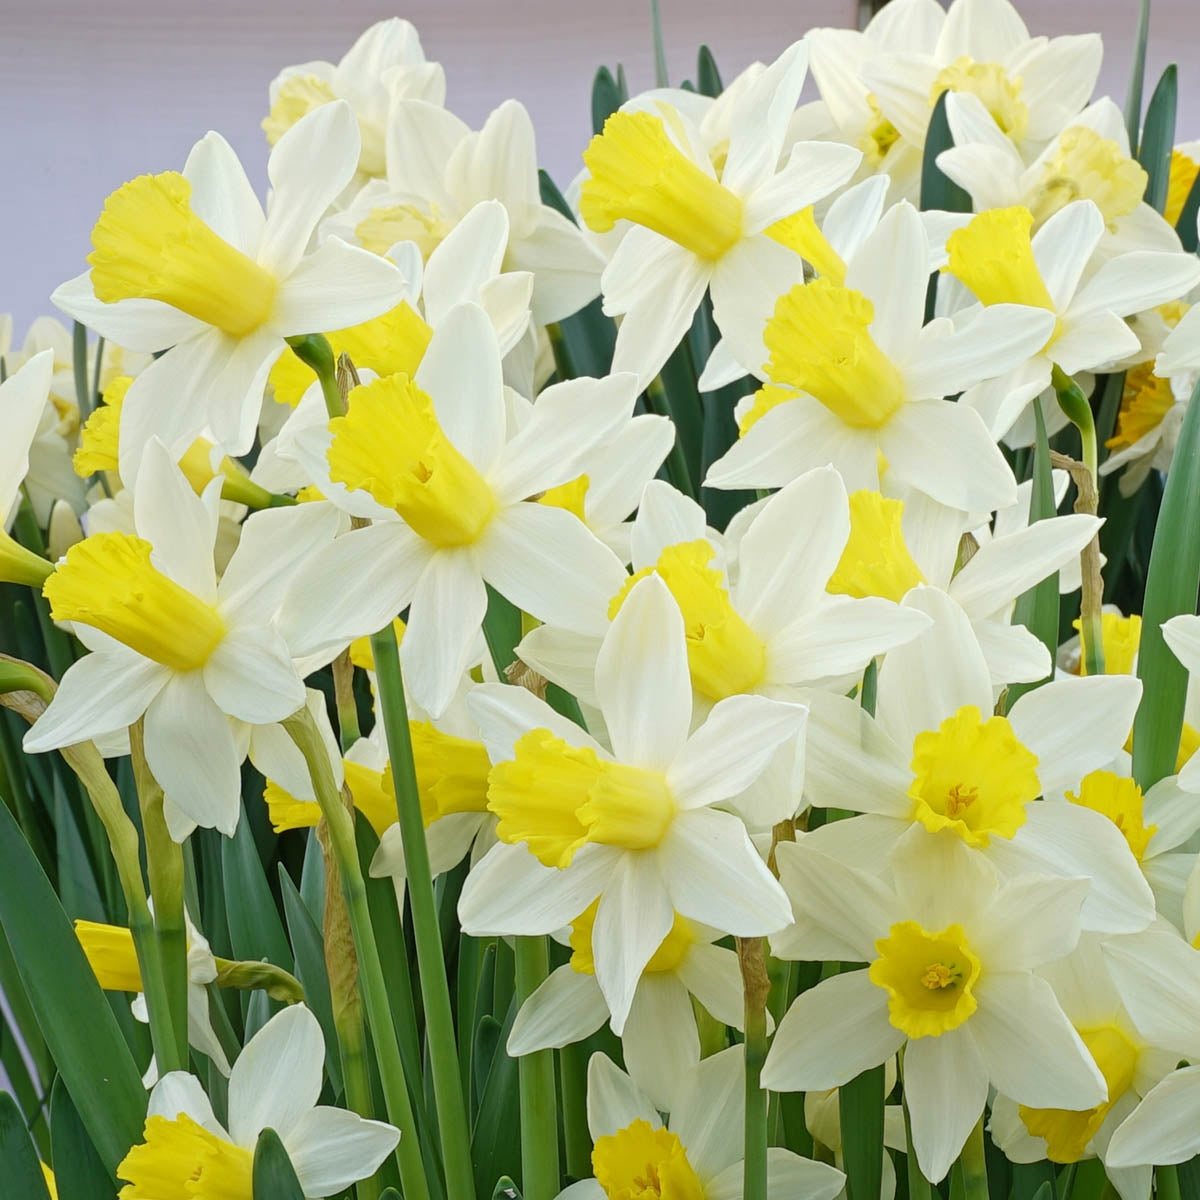 Narcissus Little Spring King